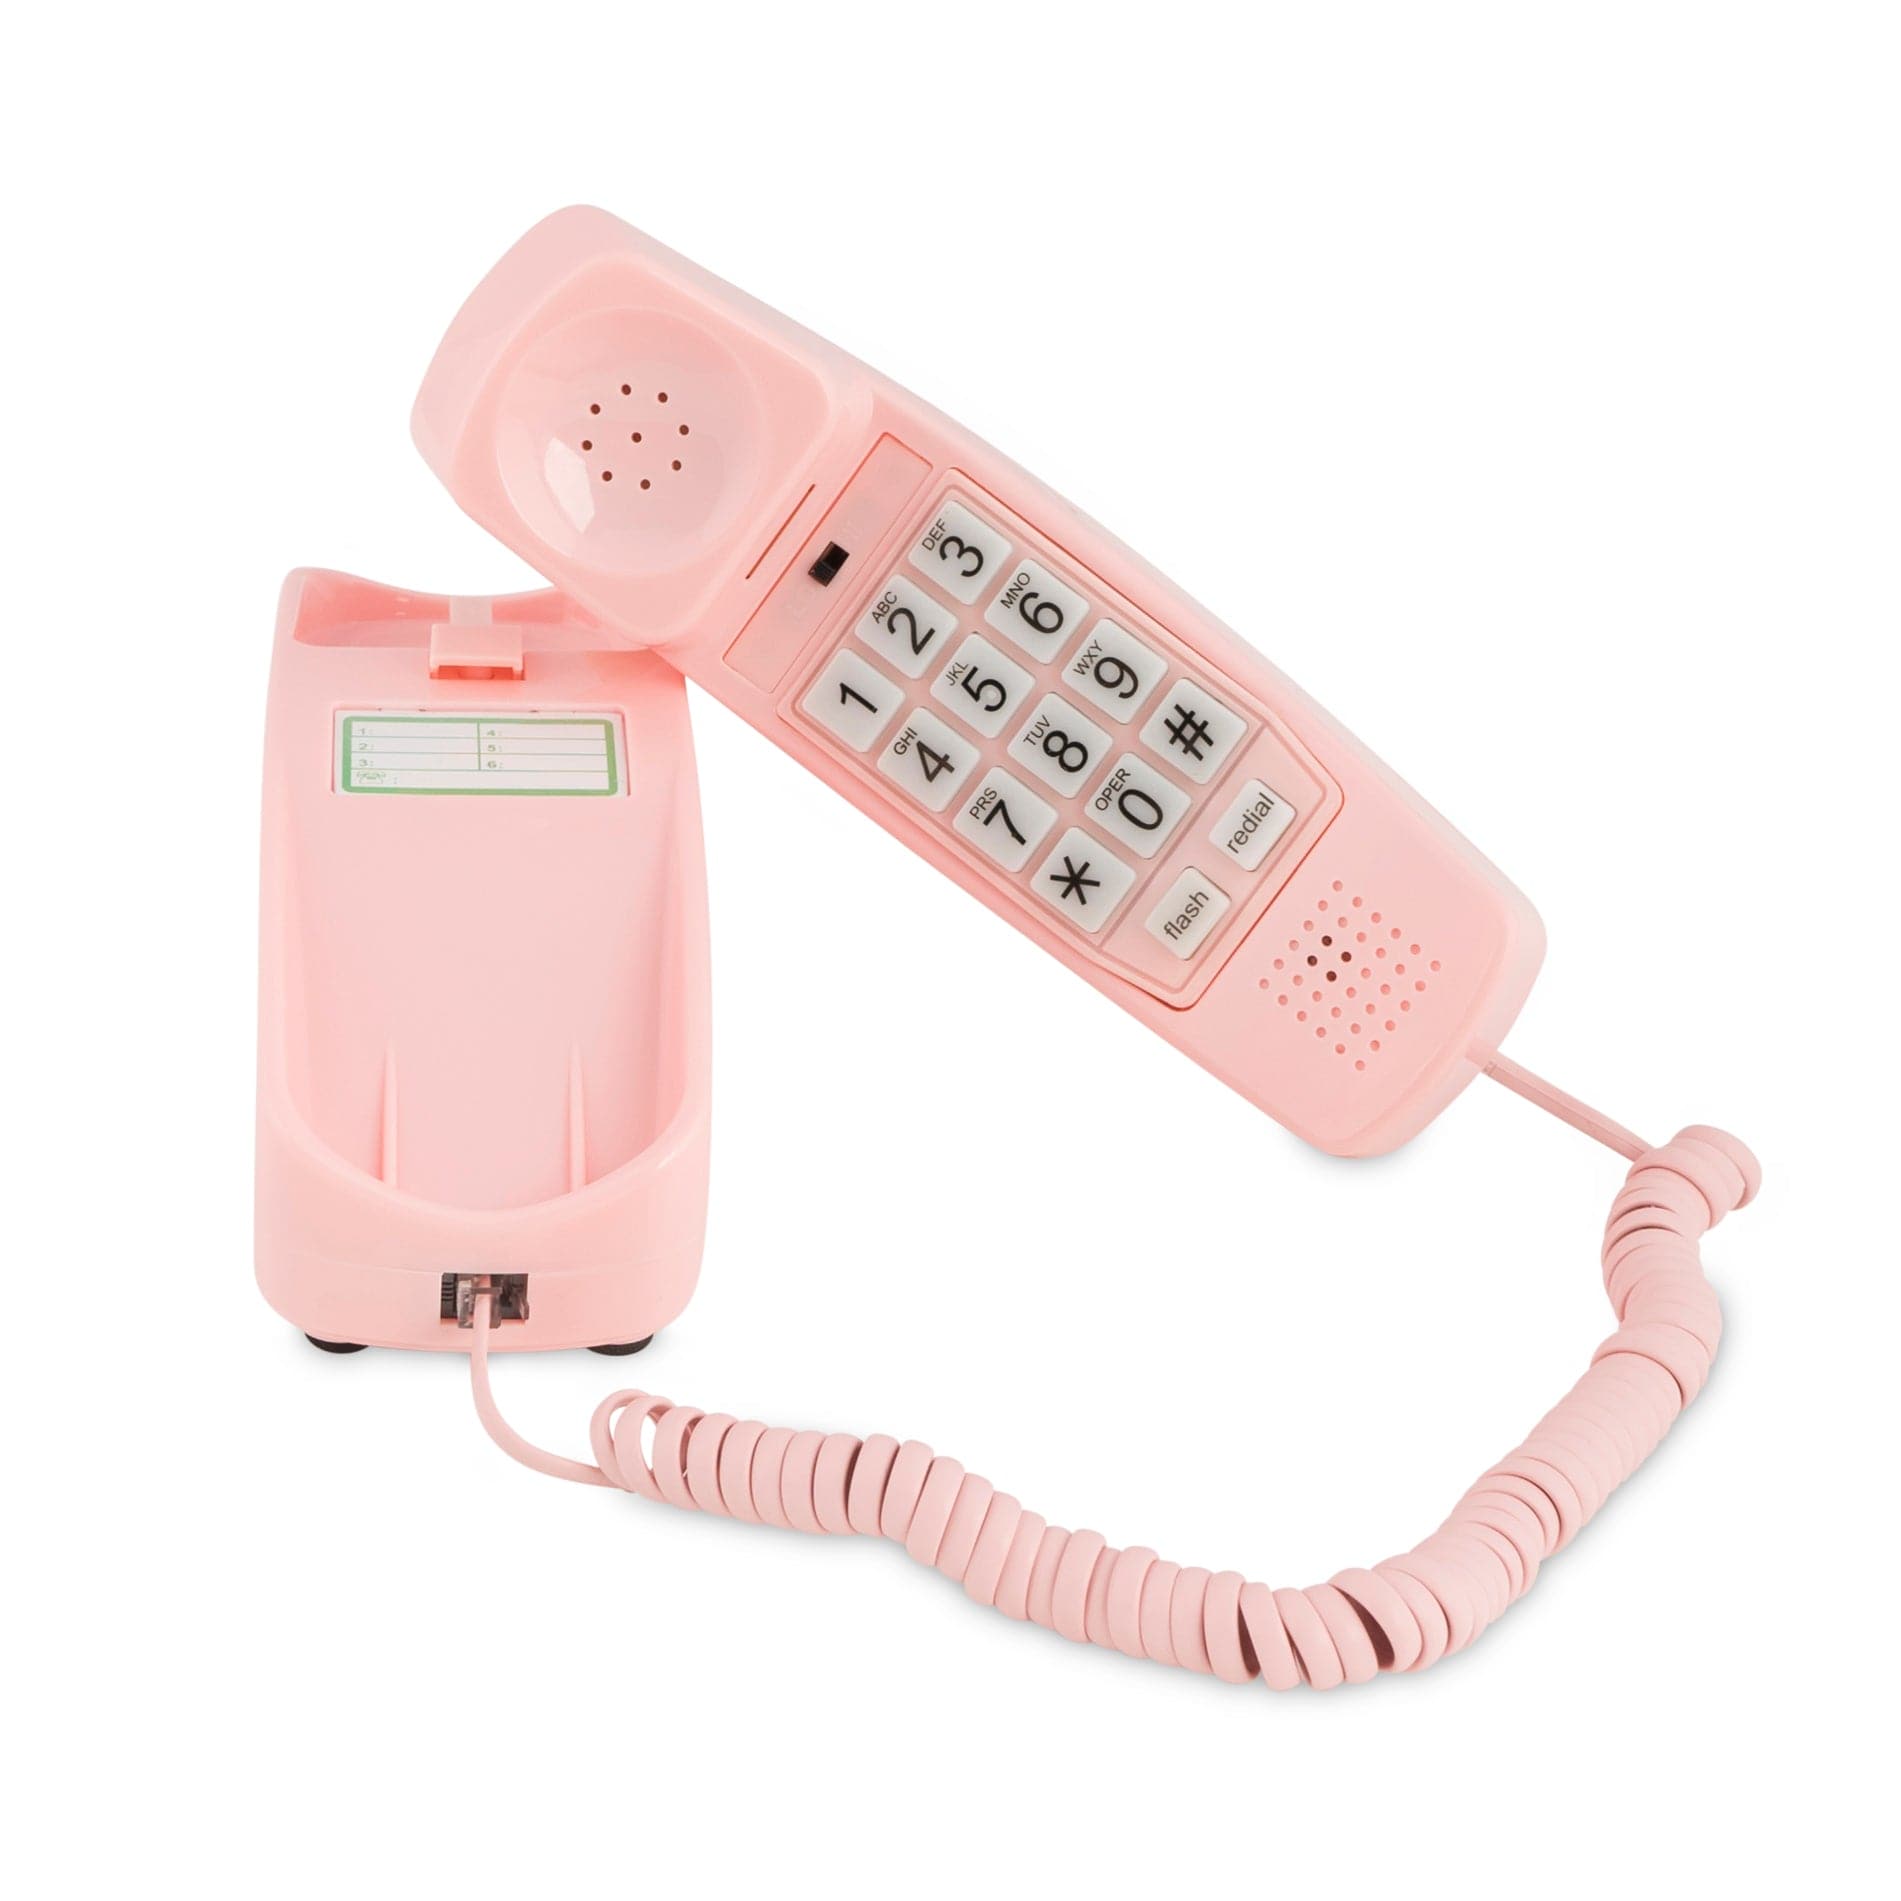 iSoHo Trimline Phone: Enhanced for Seniors, Visually Impaired. Large Buttons, Loud Ringer.Perfect for Hearing and Visually Impaired. Retro Style, Reliable Performance - Pink - USA Trading Depot, LLC